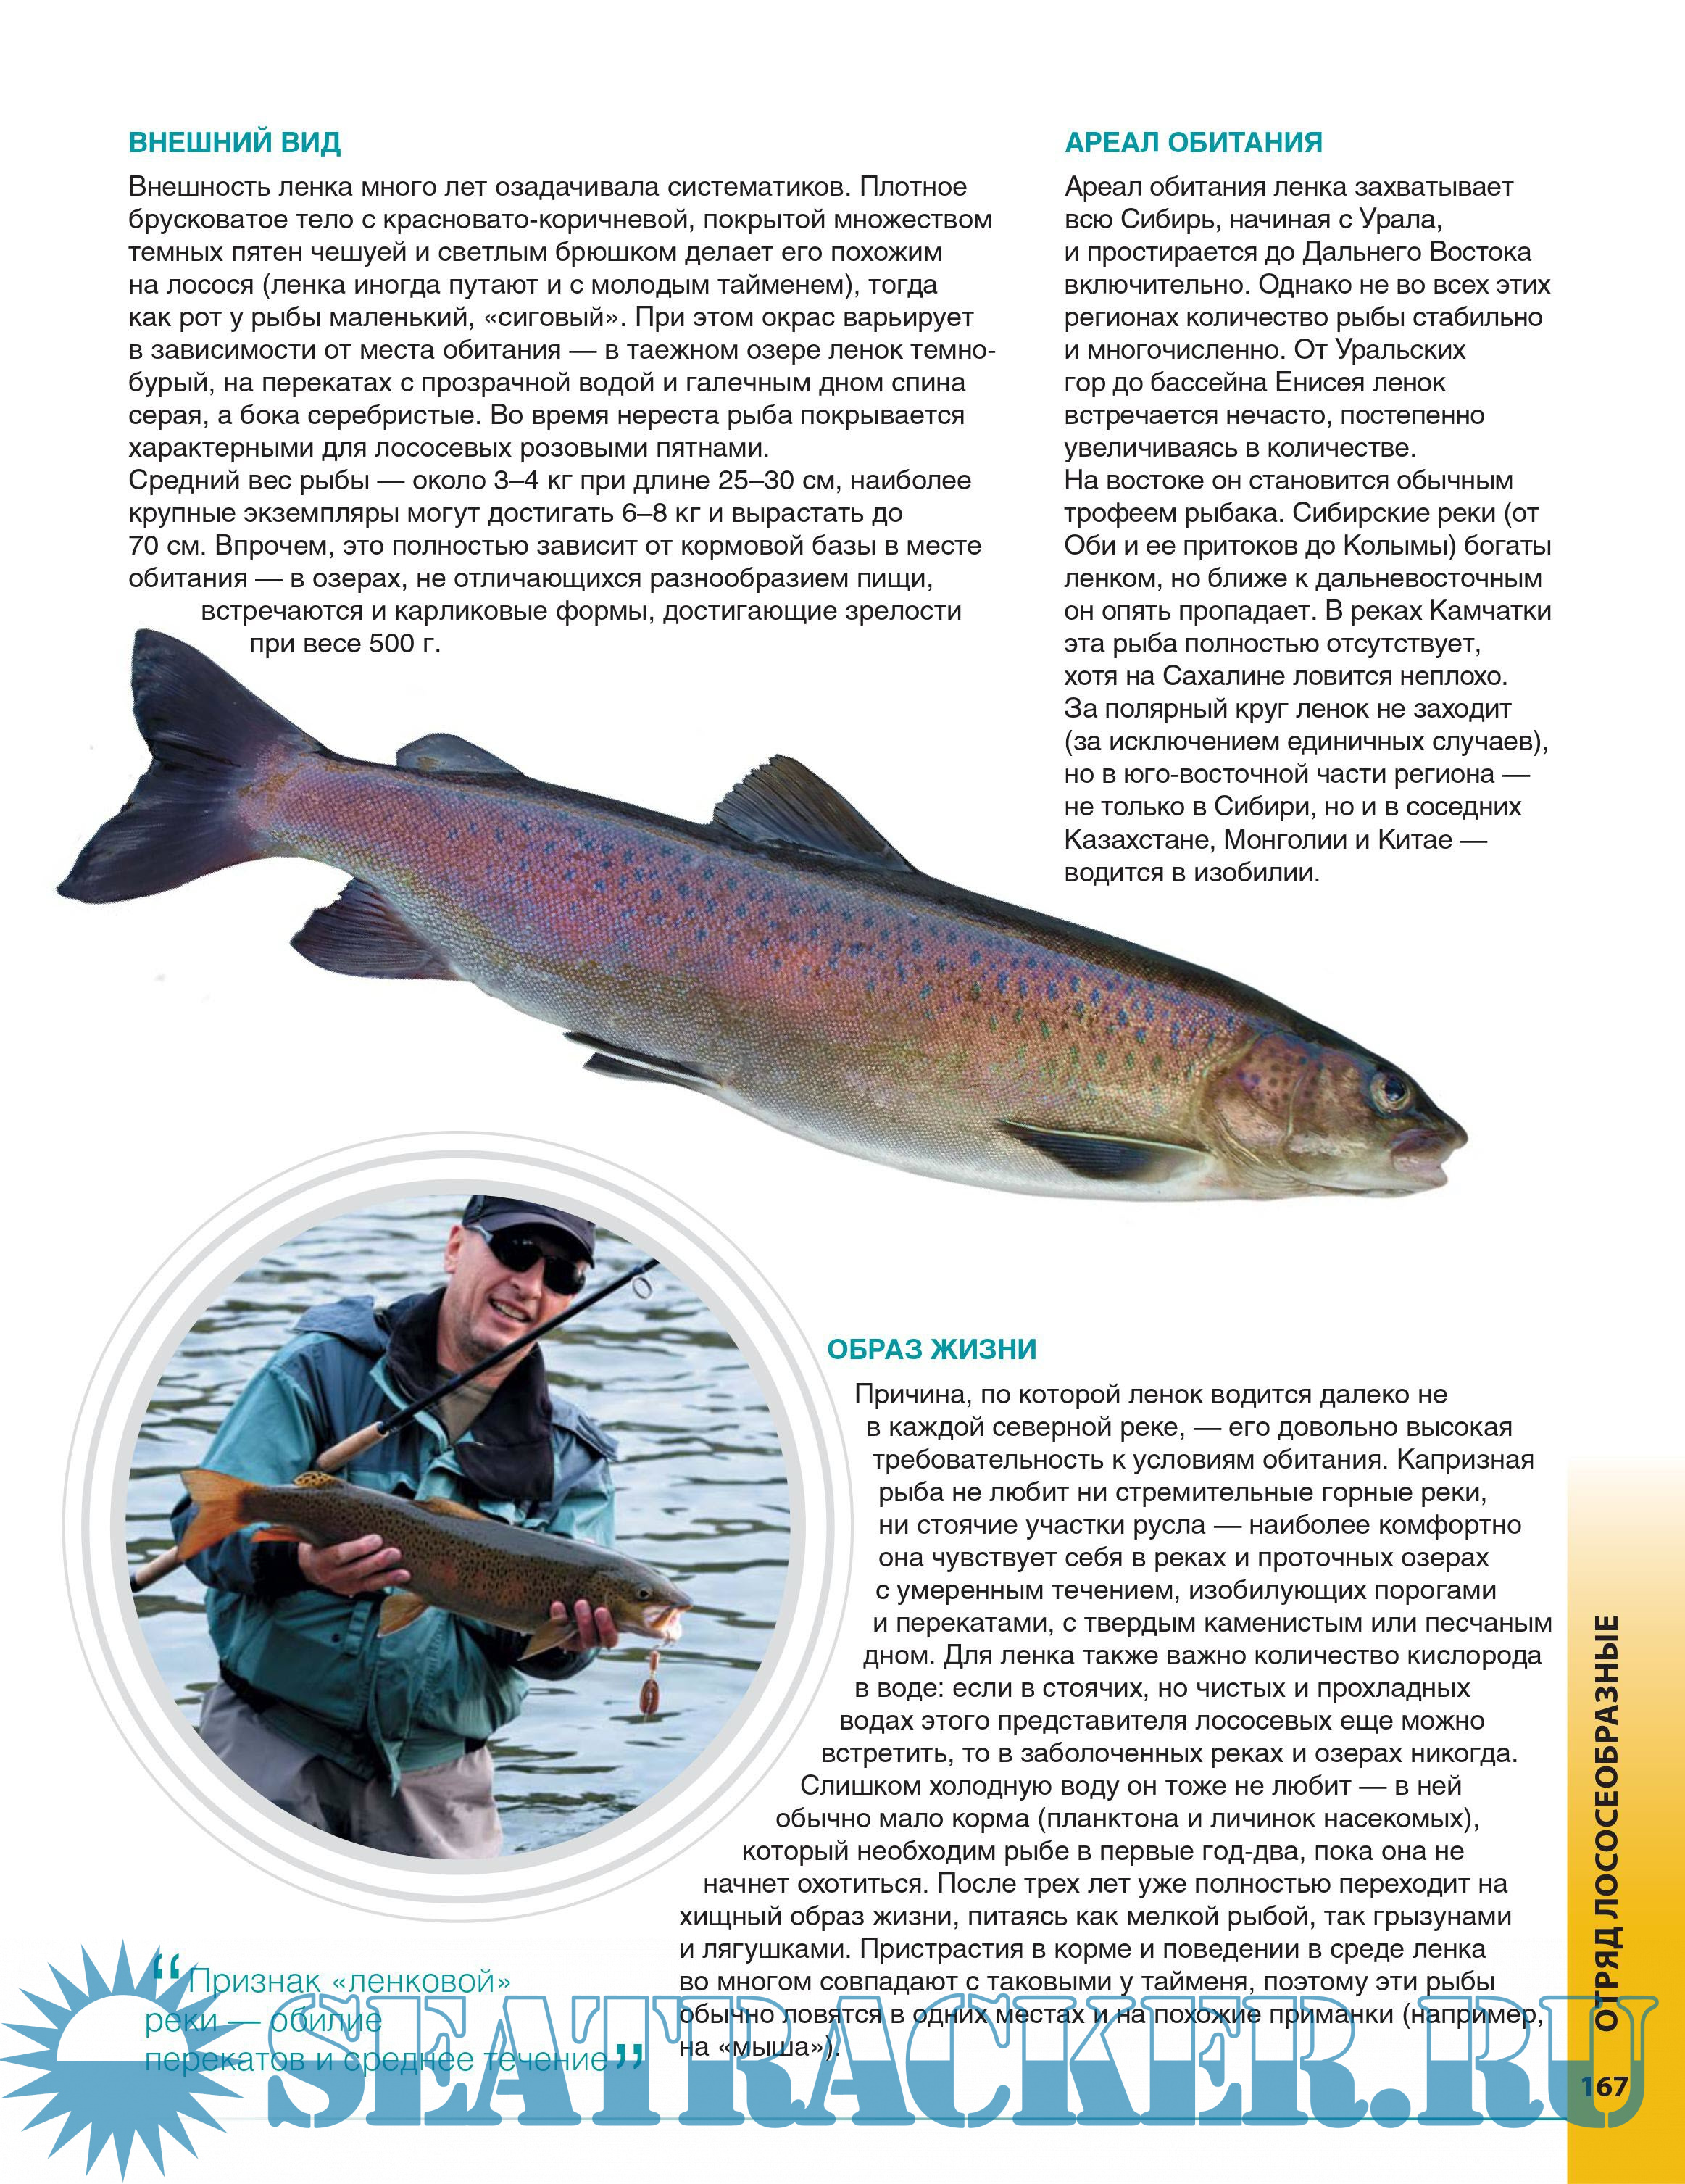 рыбалка энциклопедия рыболова 25